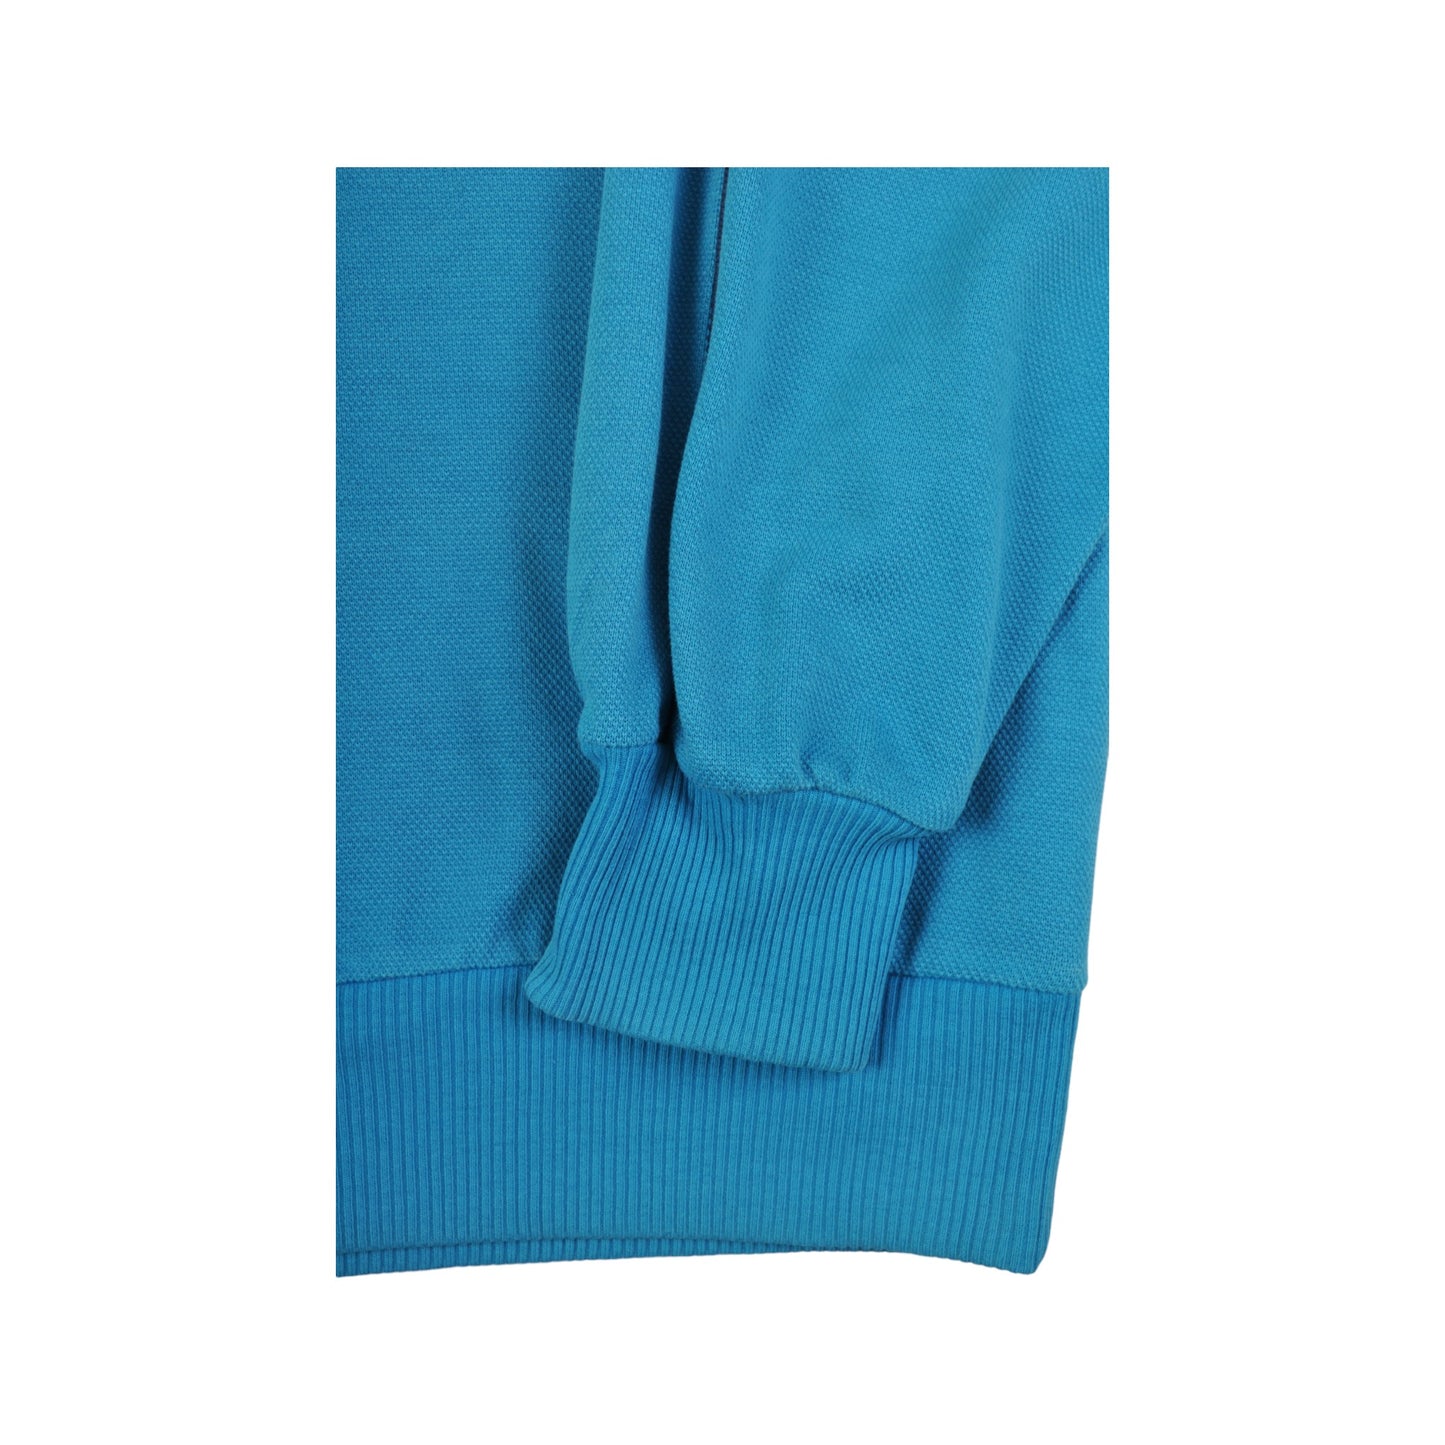 Vintage Lacoste 1/4 Zip Sweatshirt Blue Medium